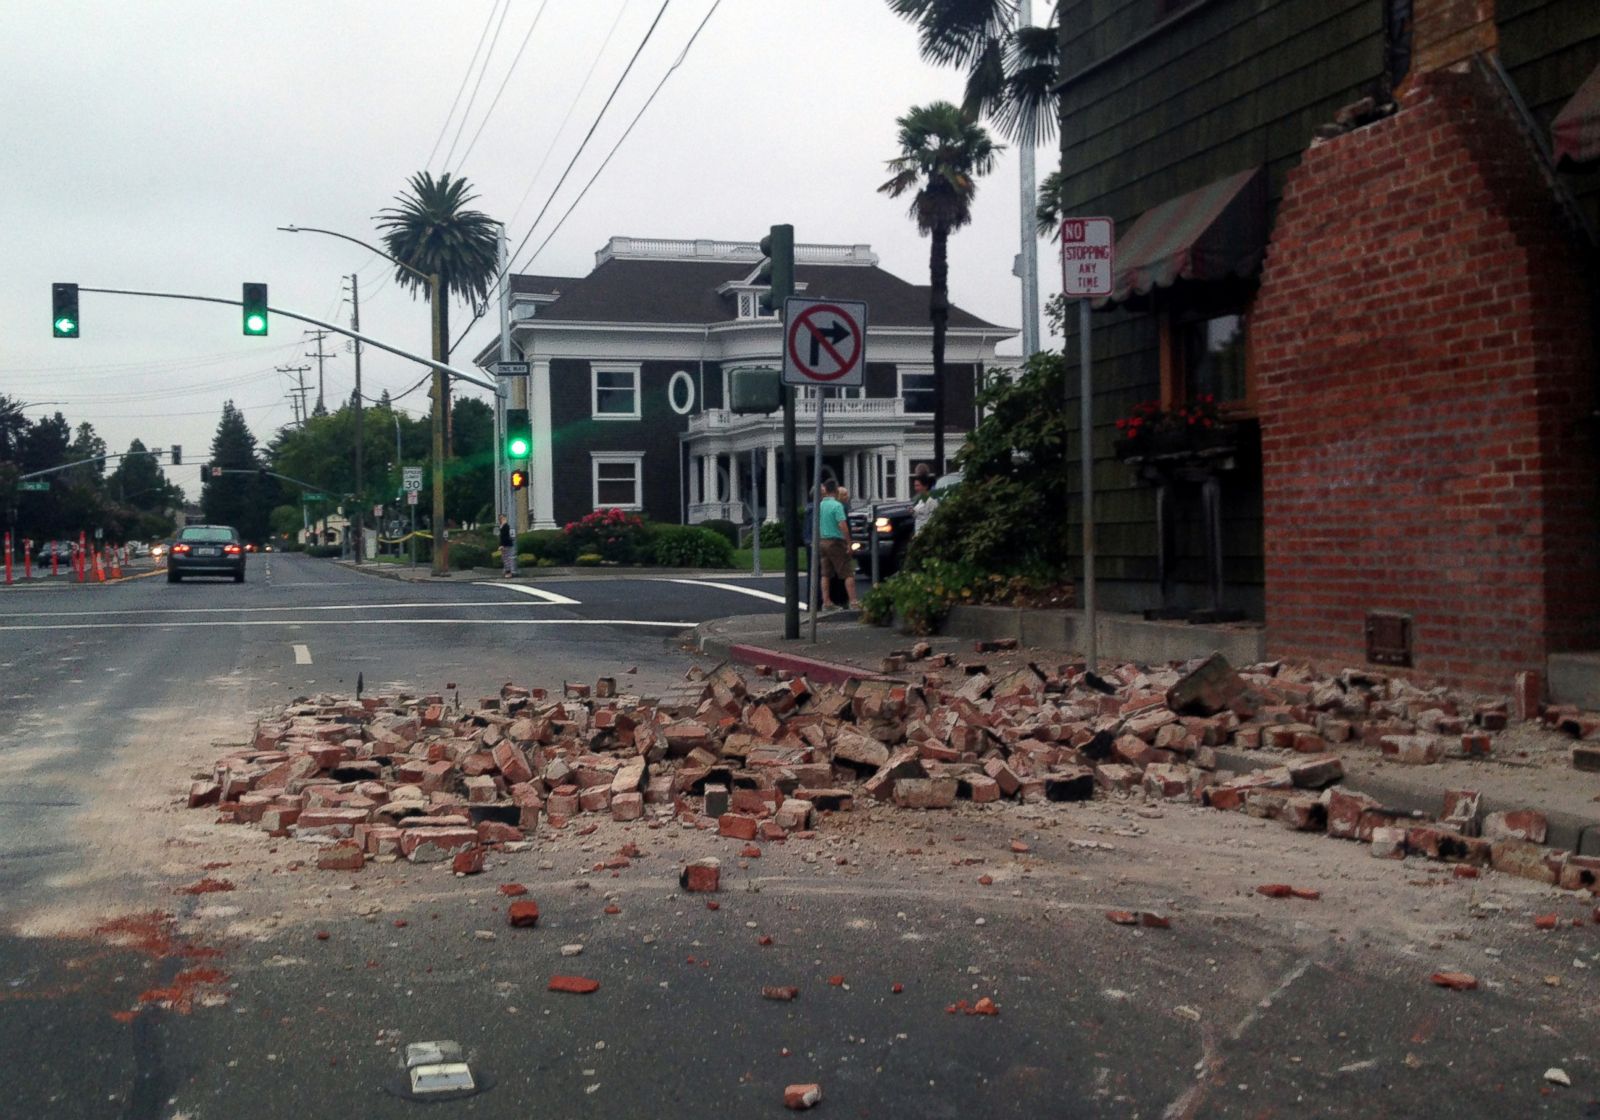 recent earthquakes california